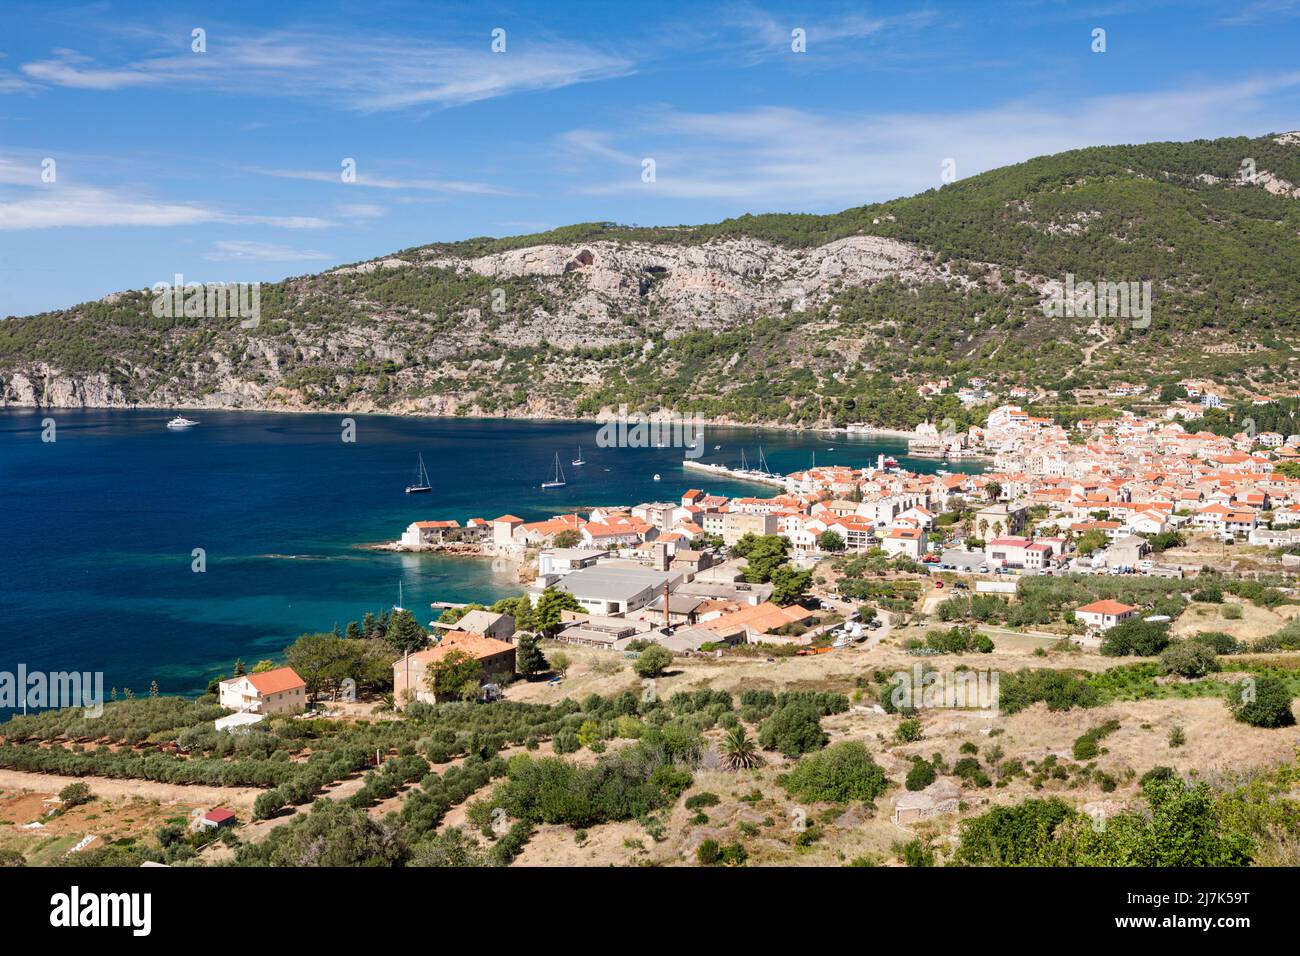 Town and bay of Komiza, Vis Island, Mediterranean Sea, Croatia Stock Photo